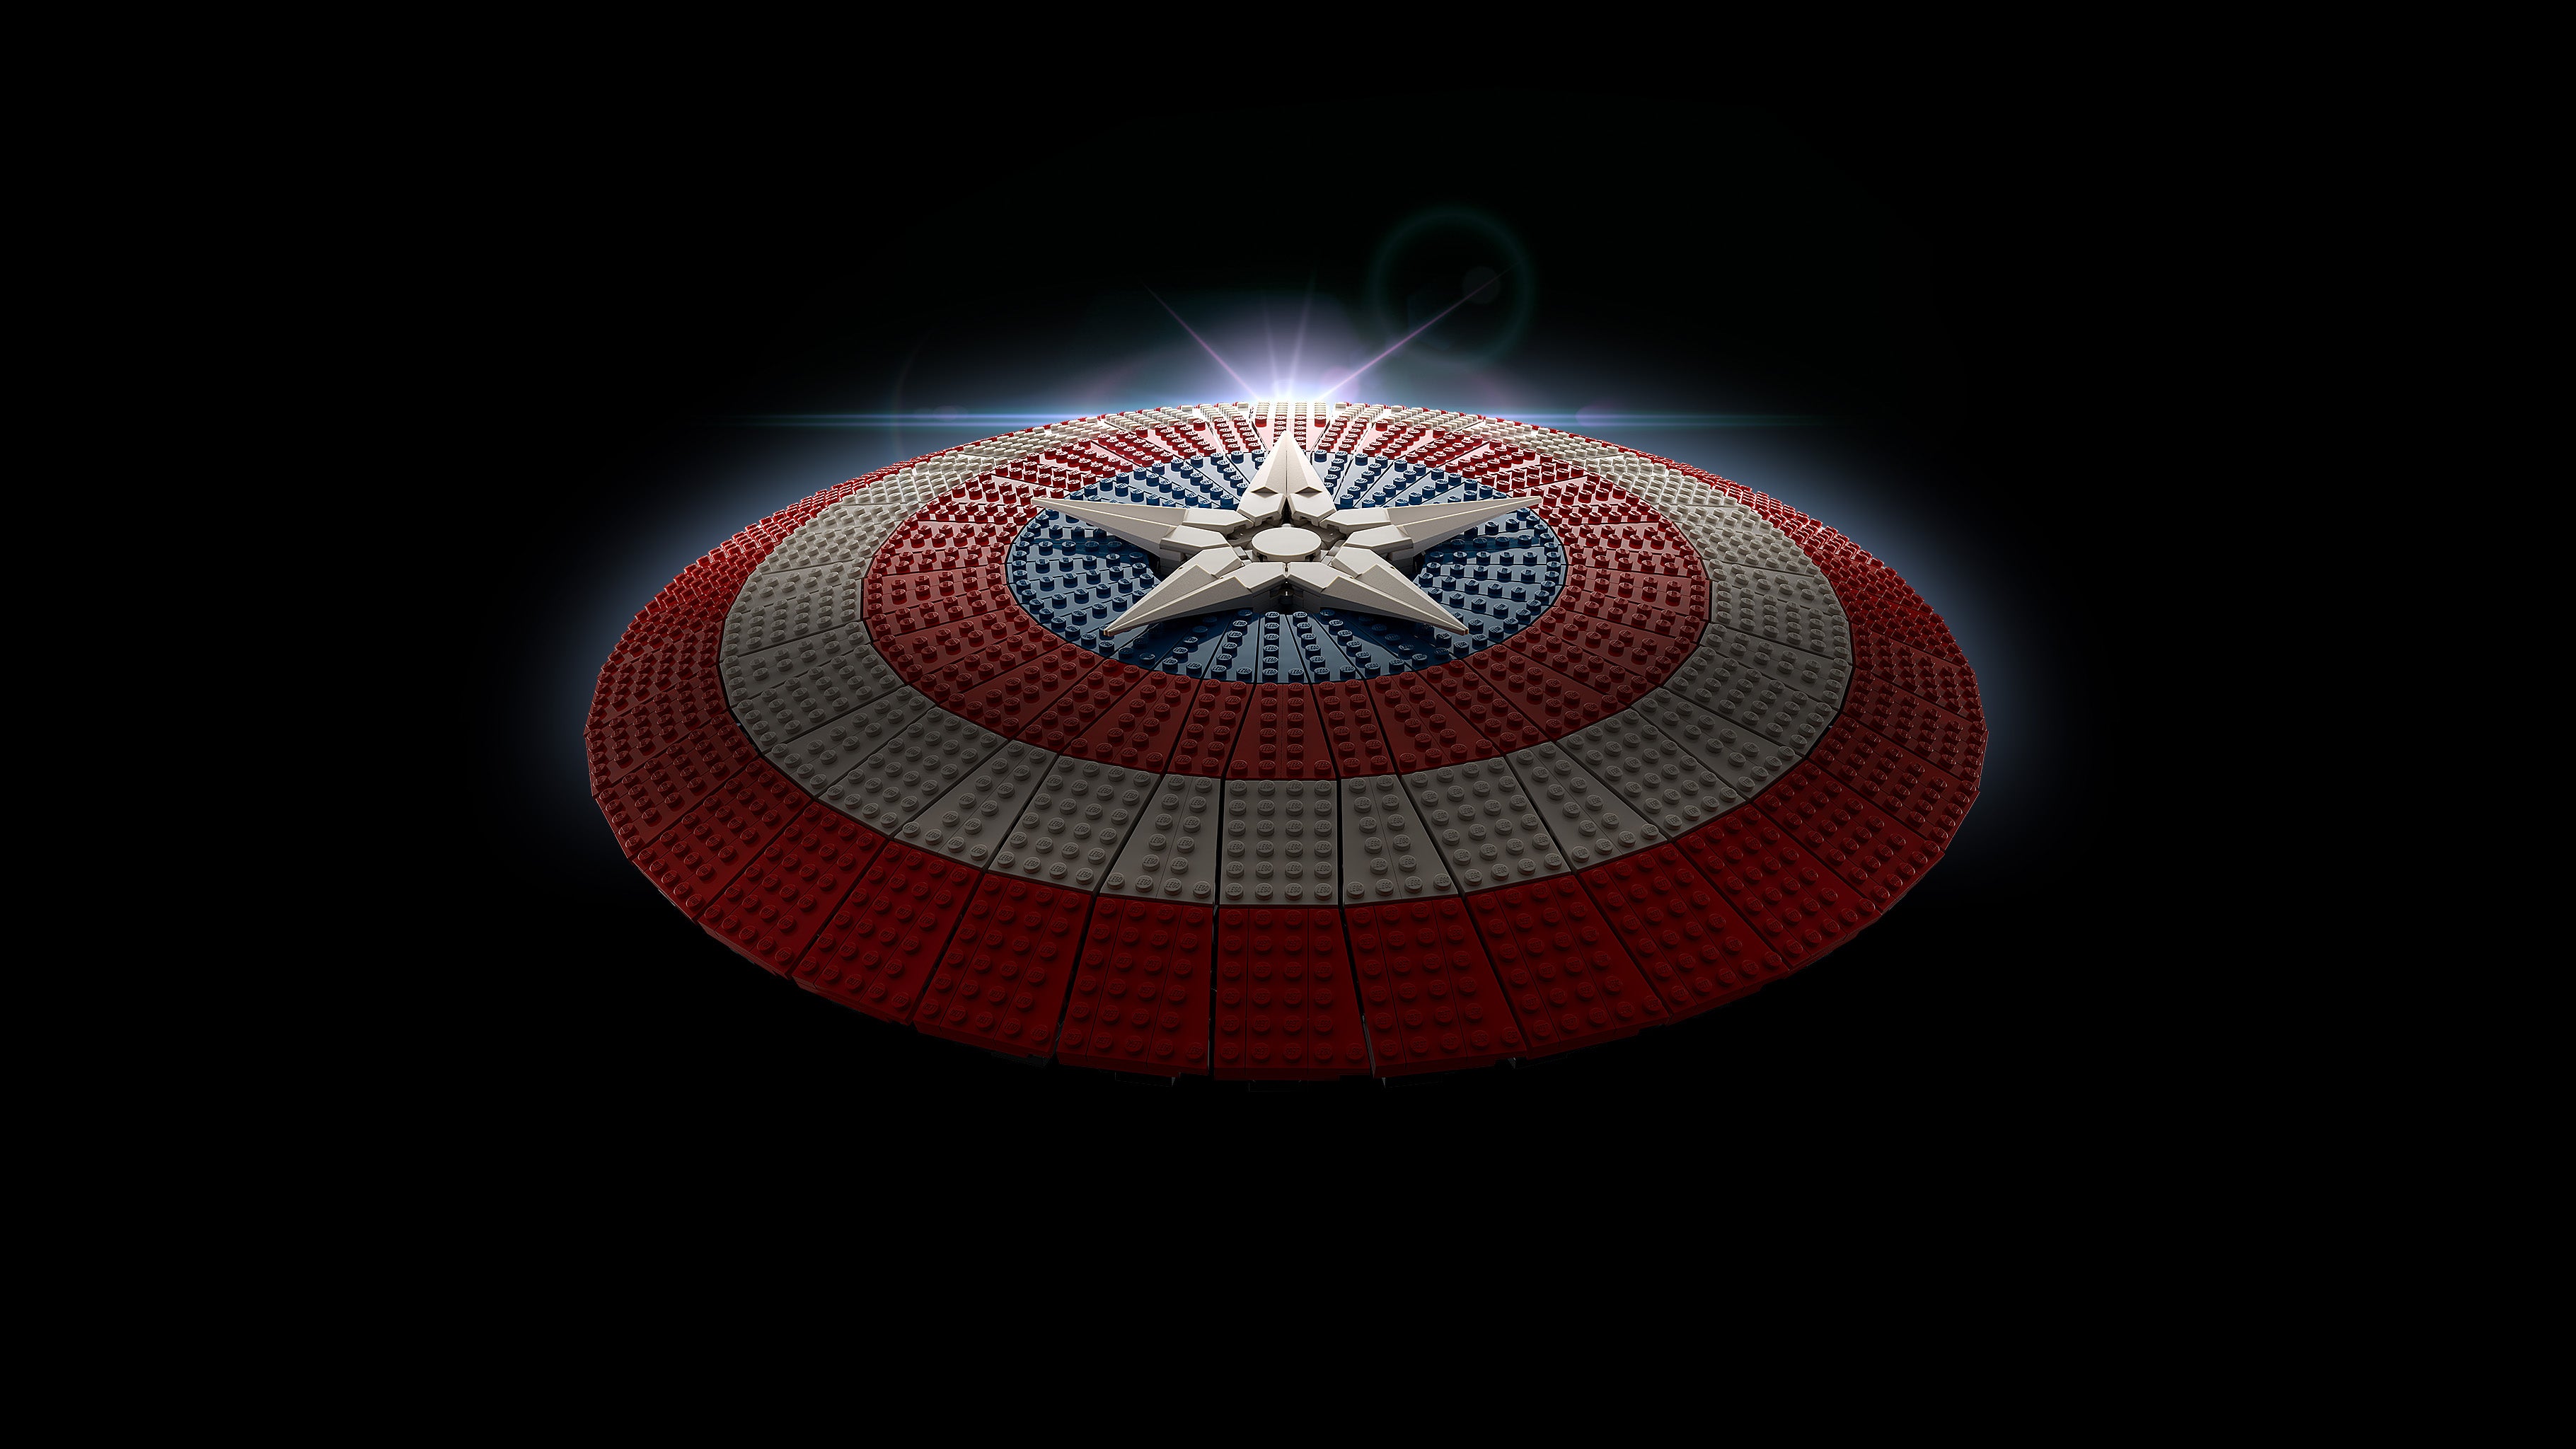 Lego 76262 Captain Americas Shield